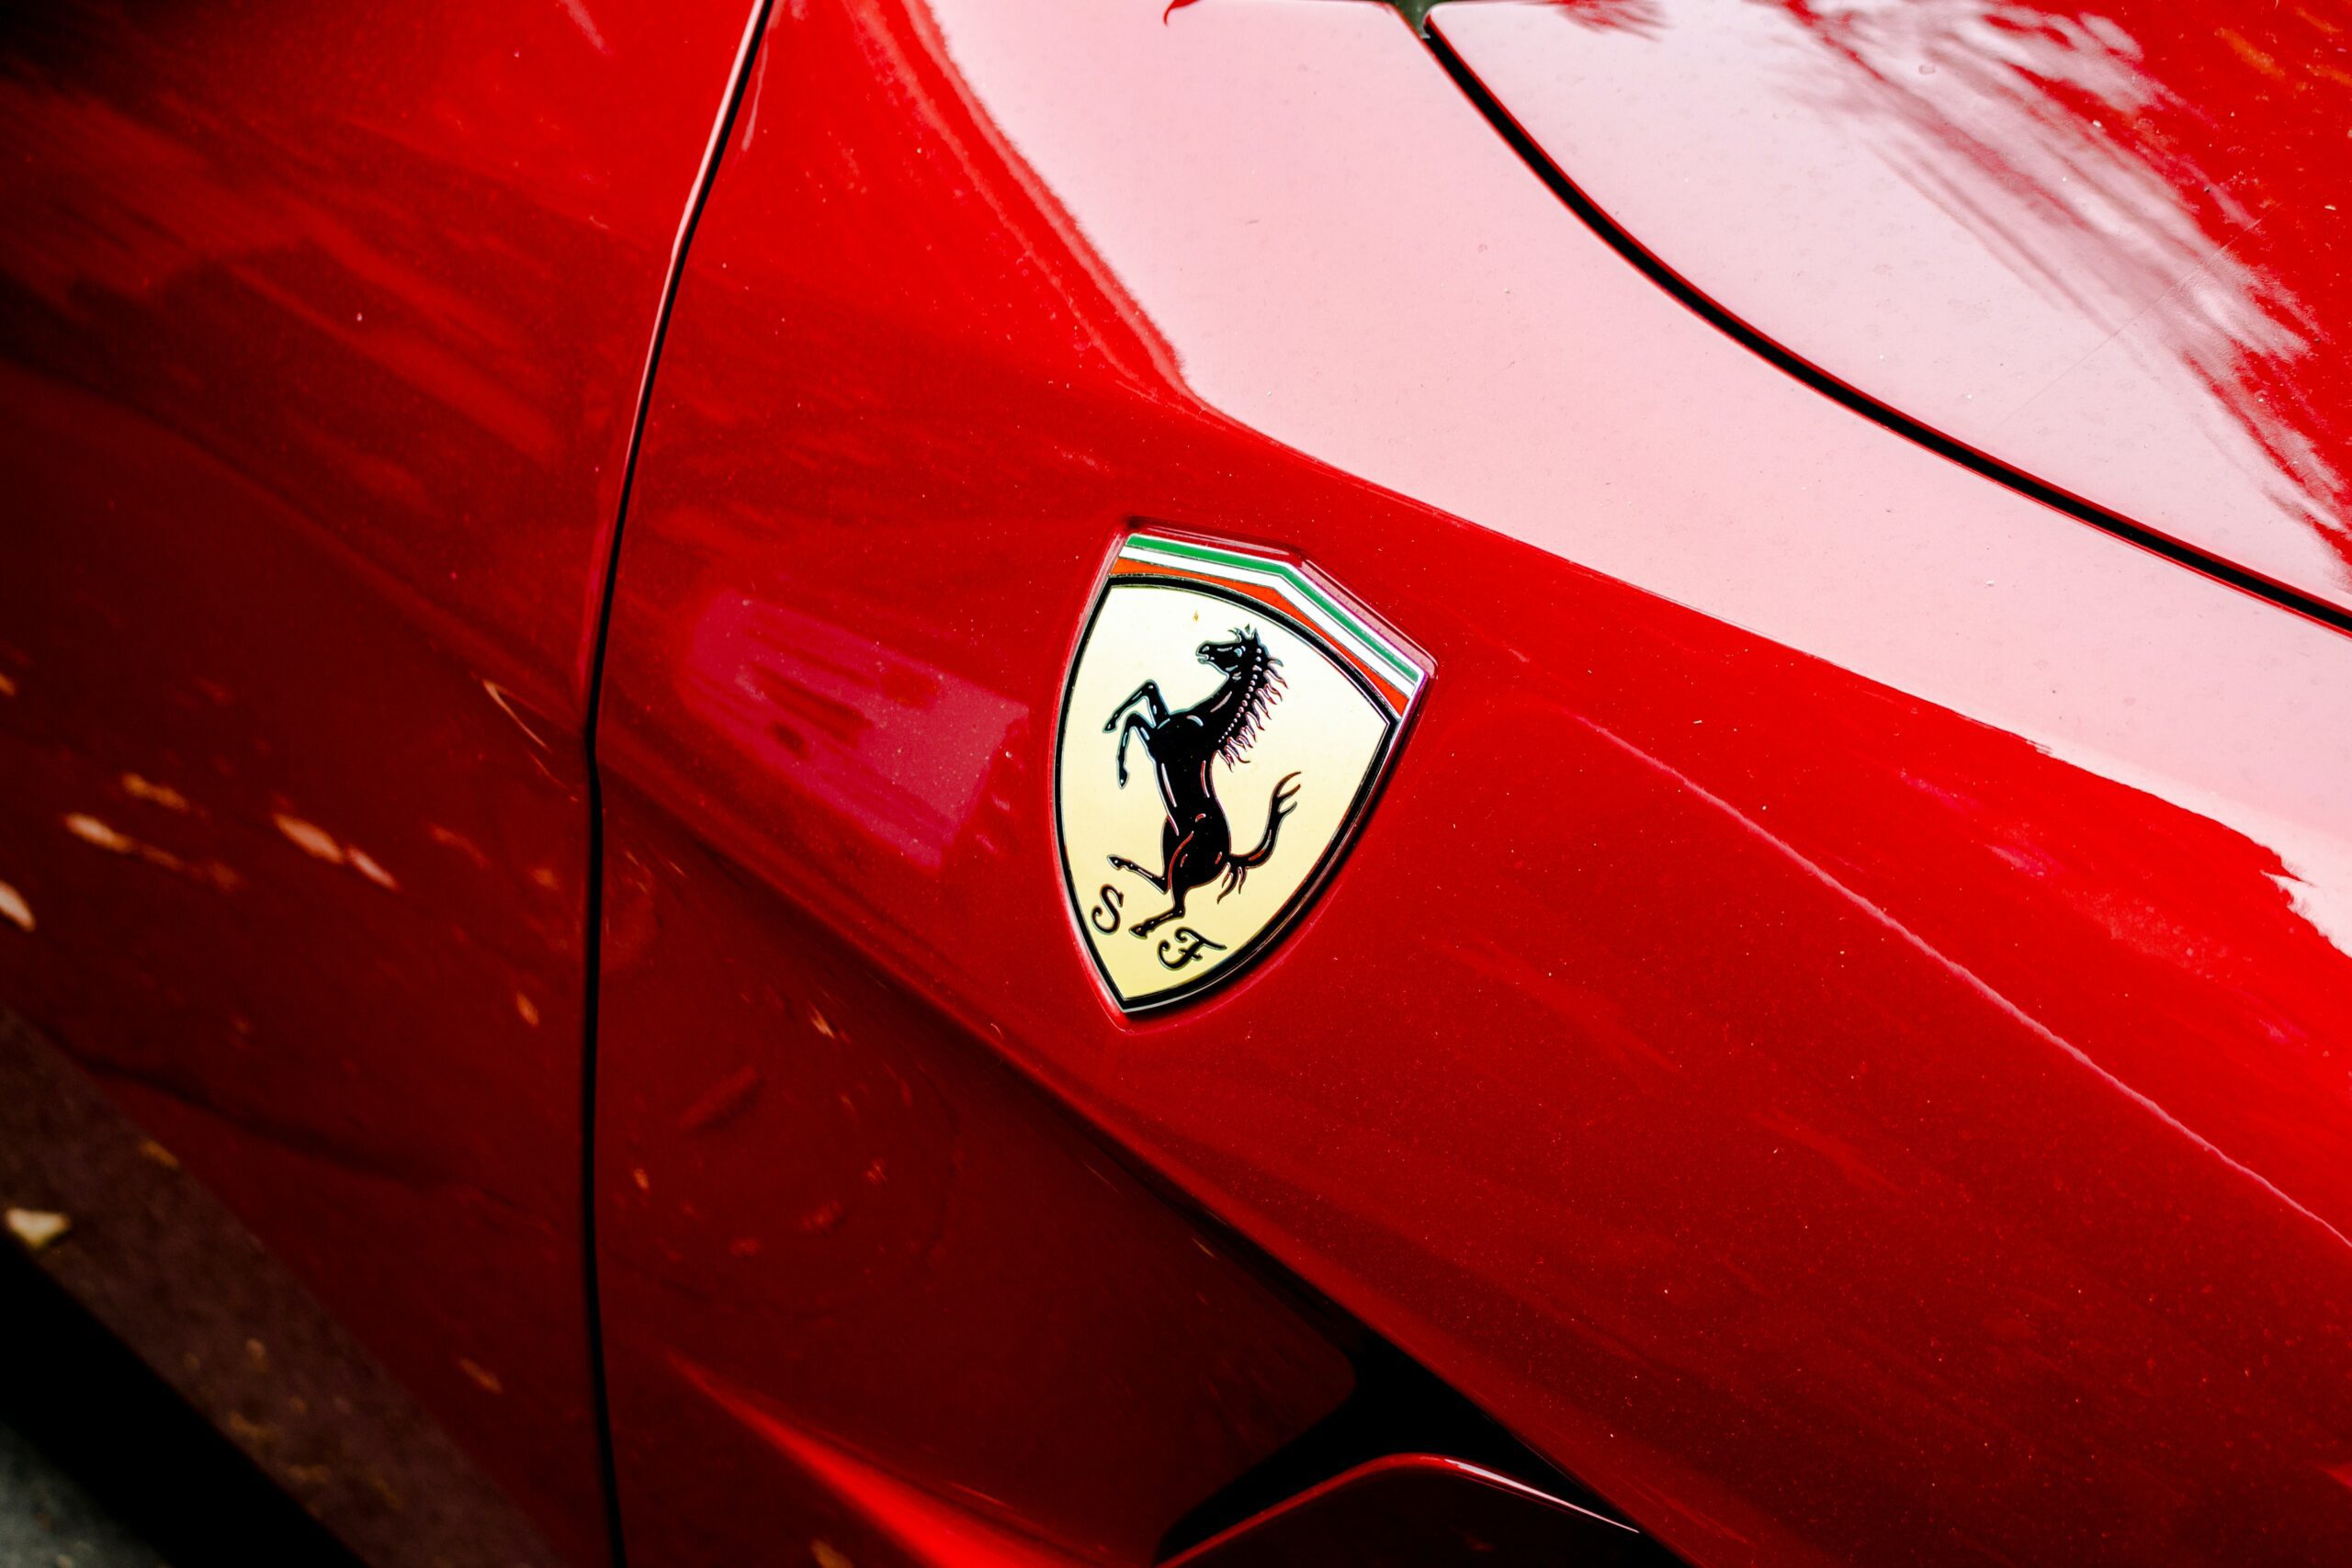 Ferrari Model List: Every Ferrari, Every Year